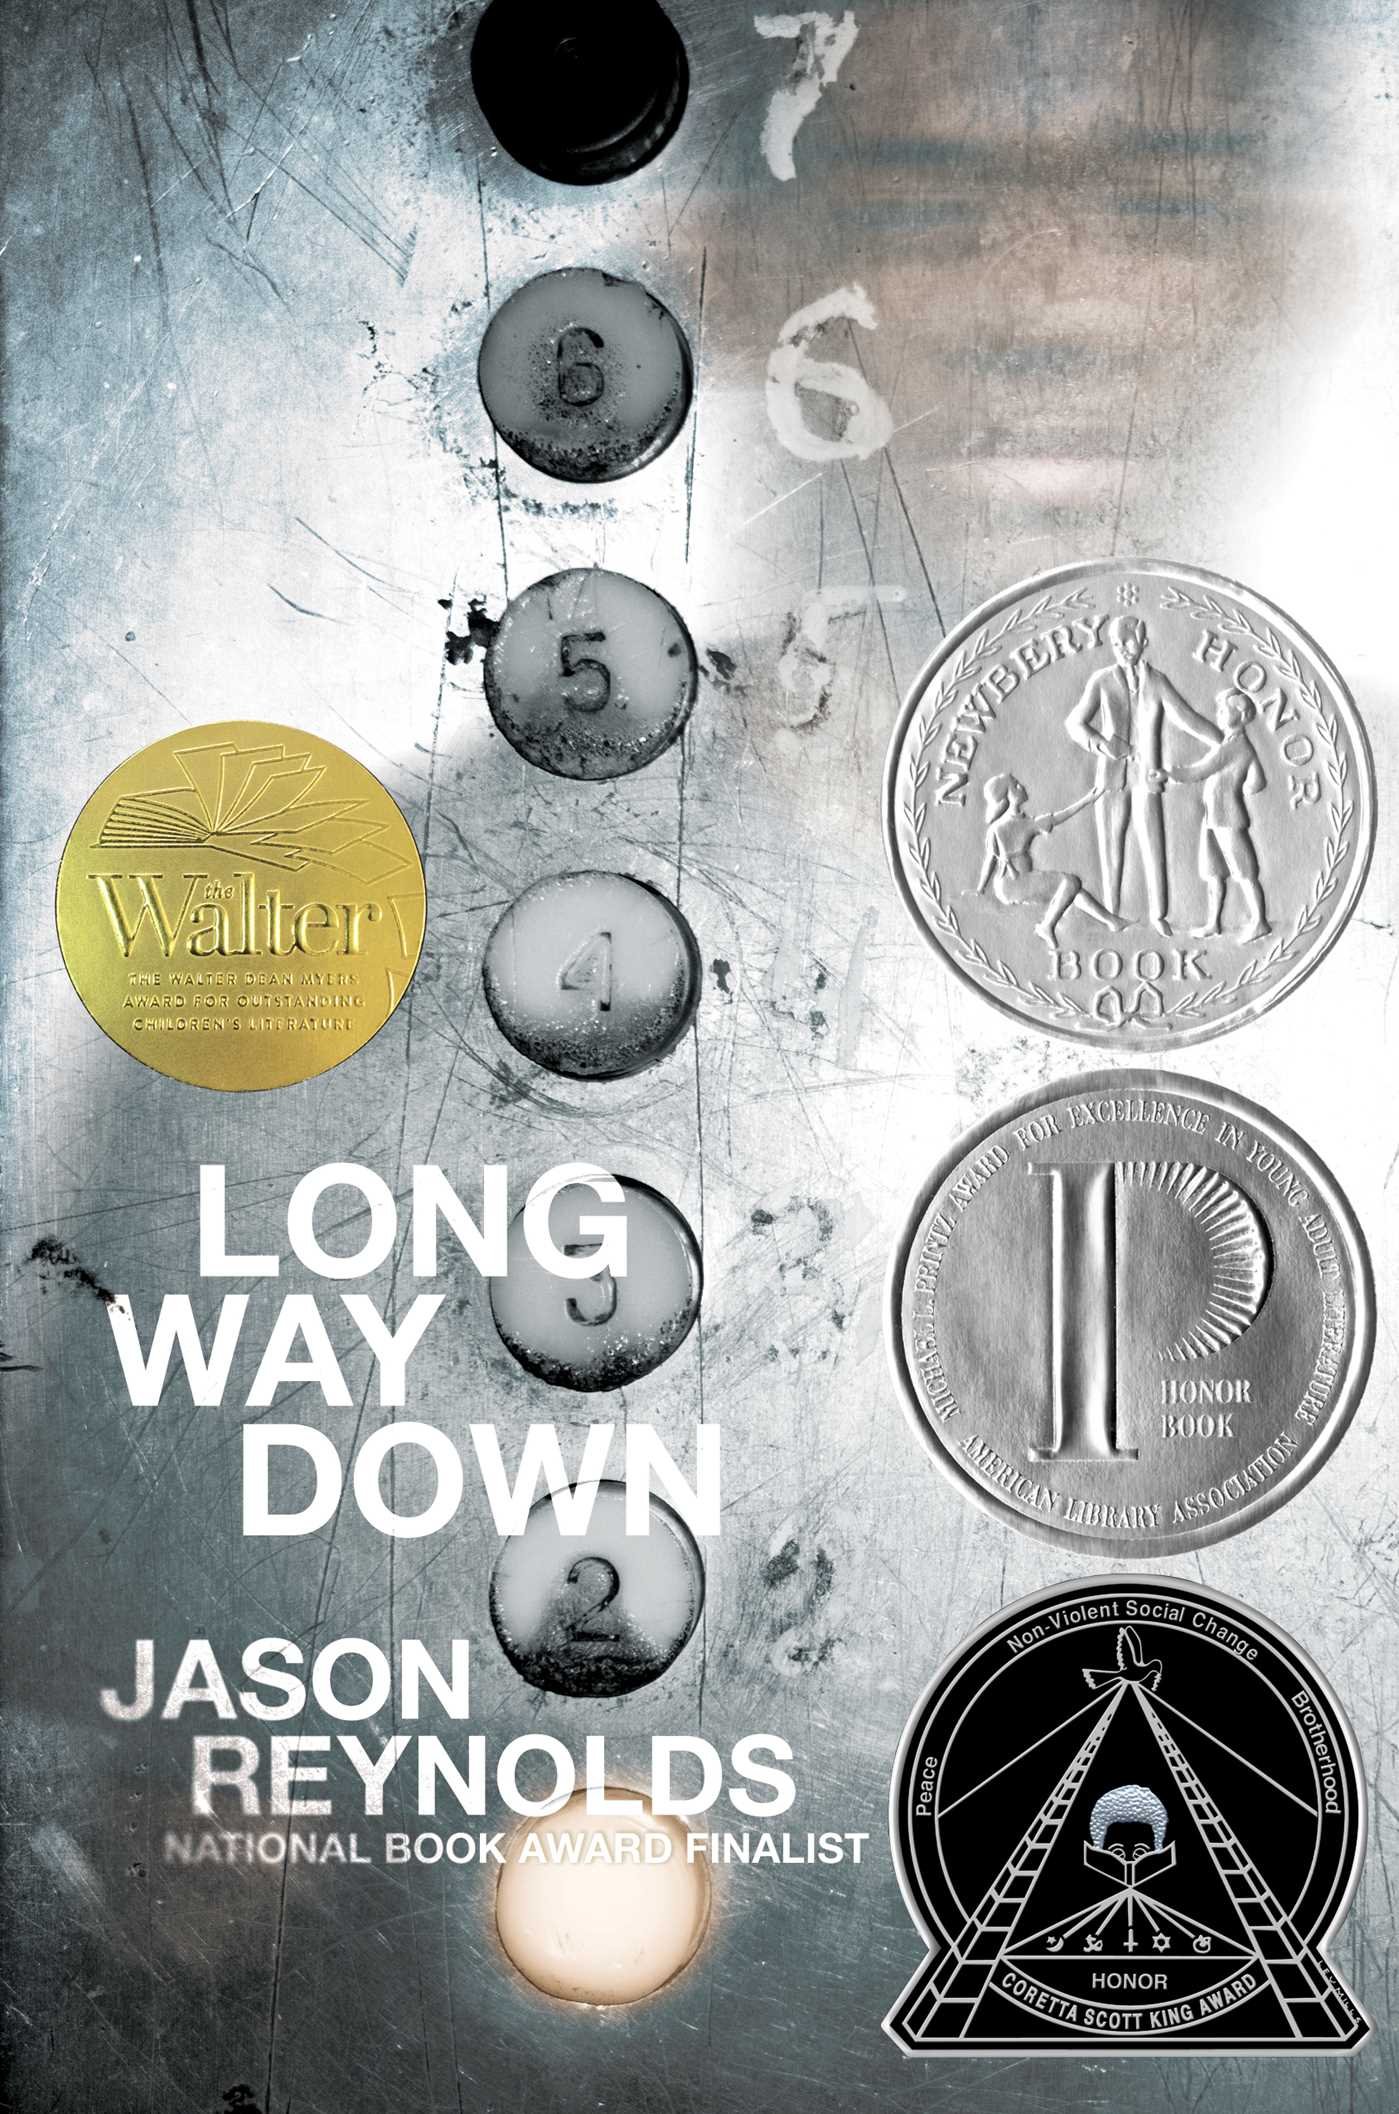 Amazon.com: Long Way Down (9781481438254): Jason Reynolds: Books